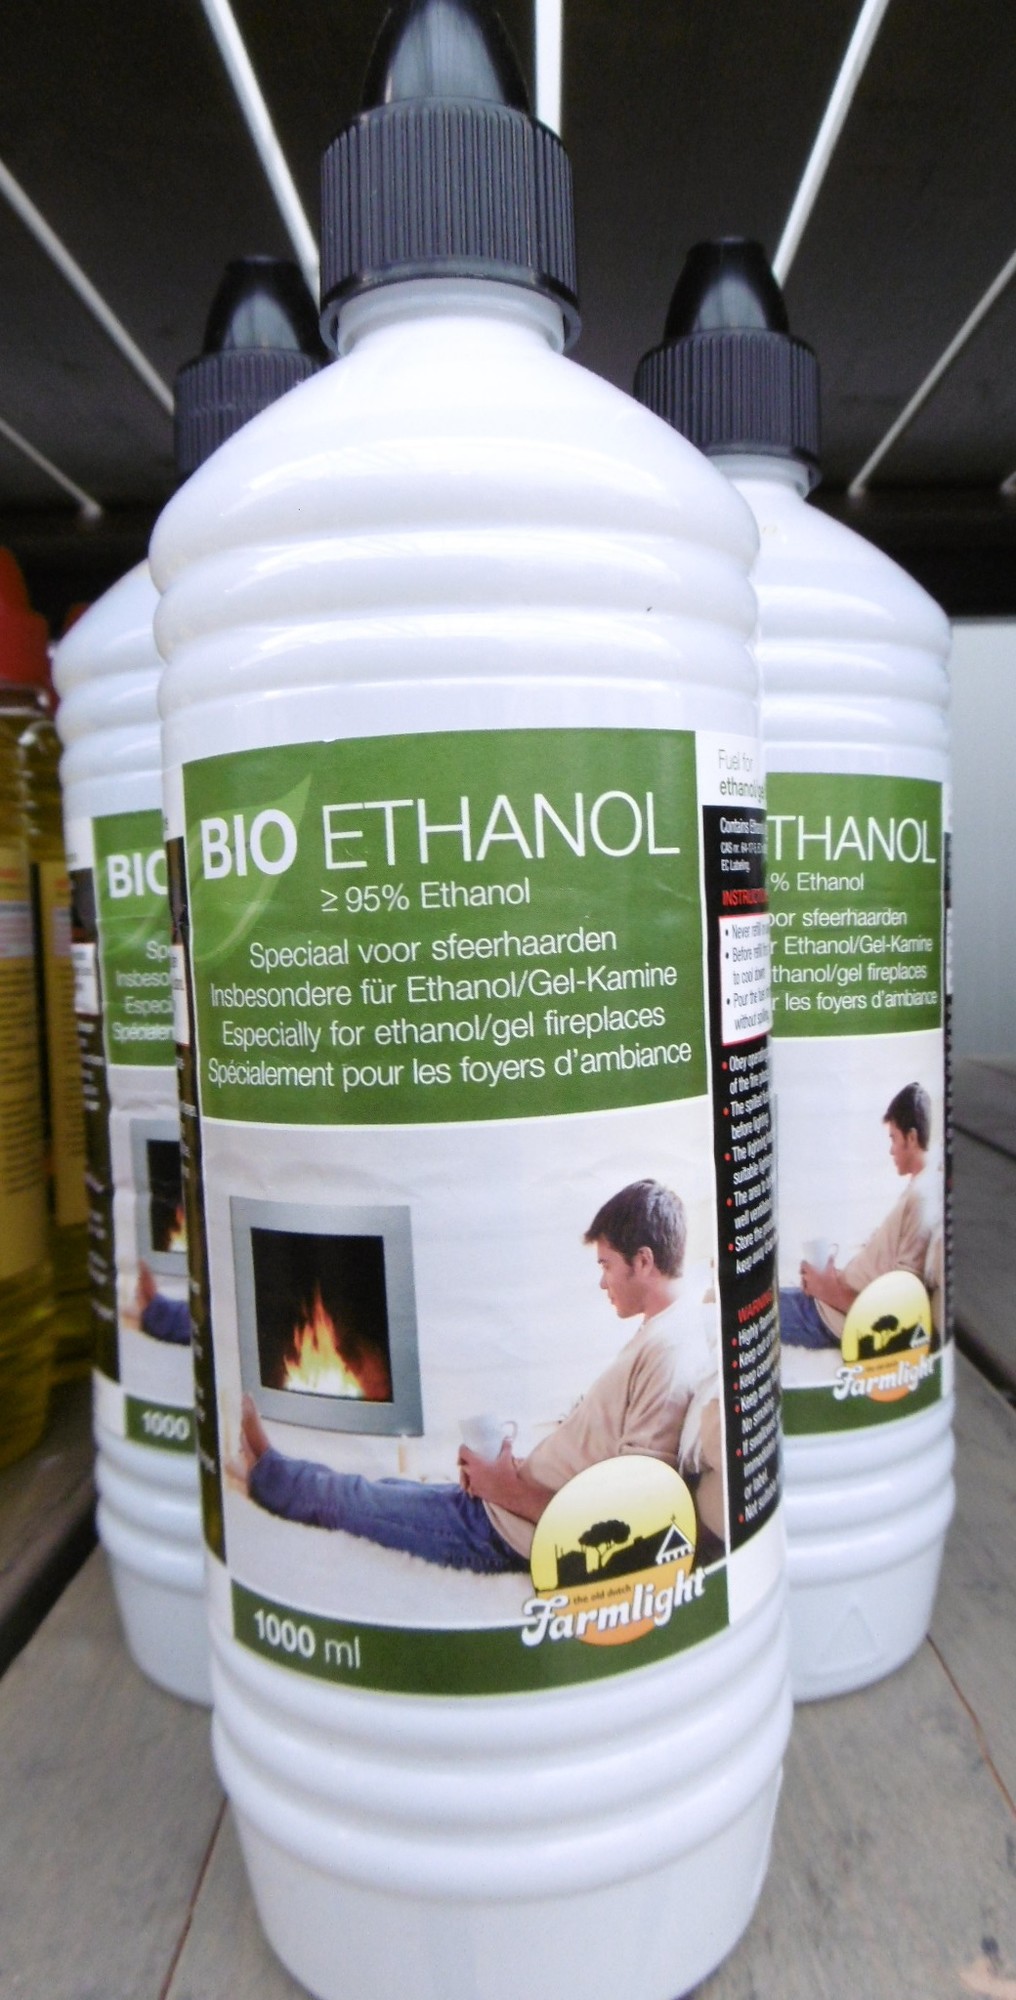 Bio ethanol